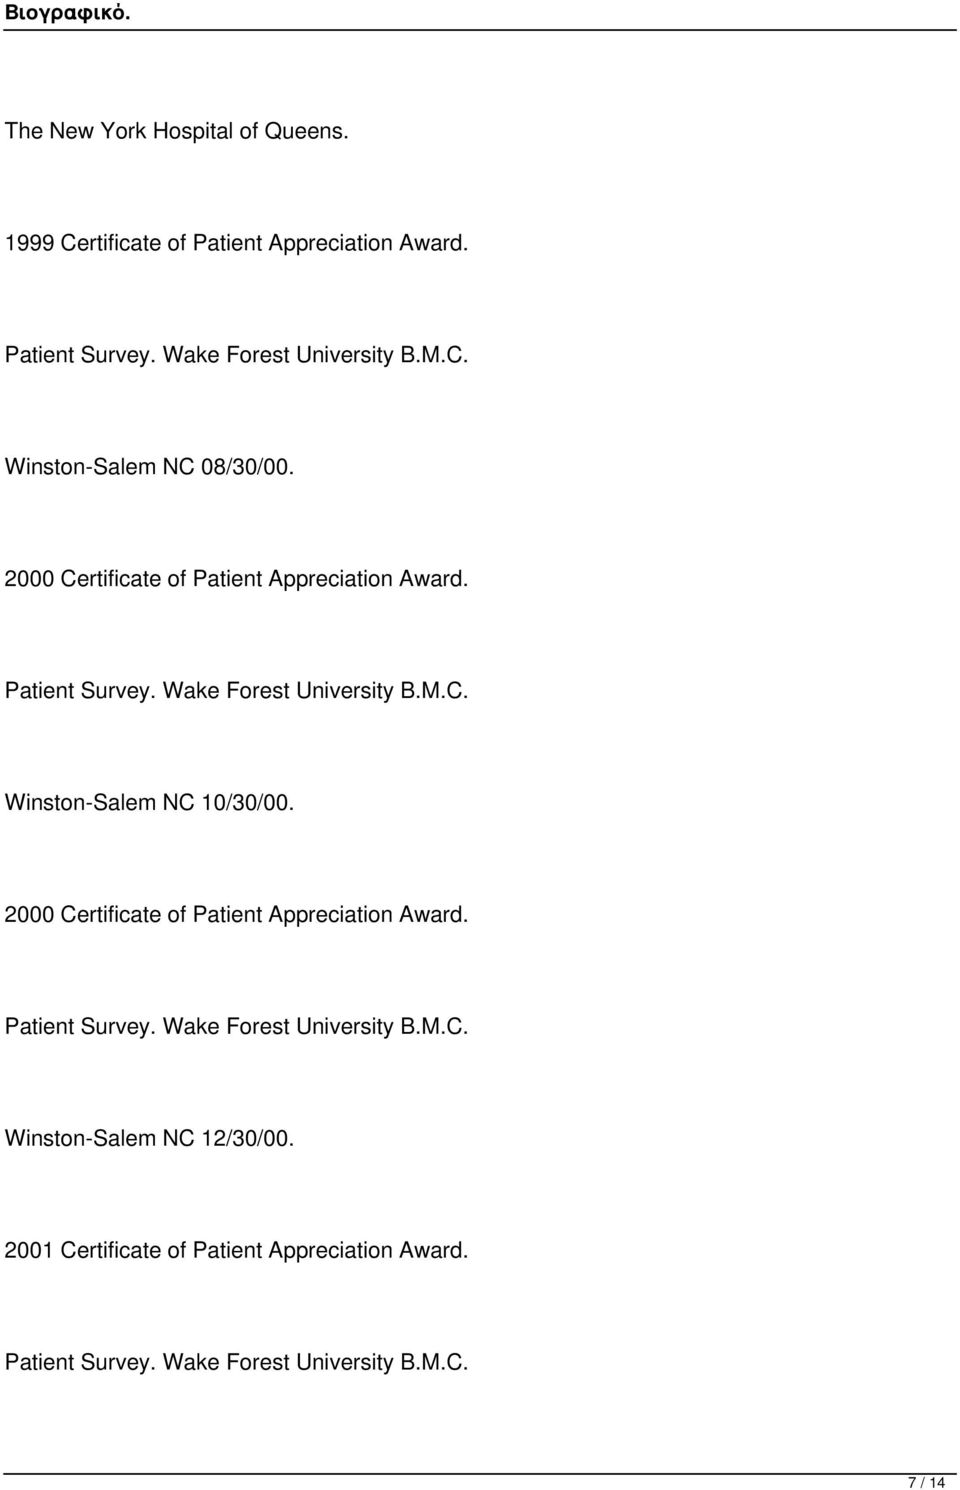 2000 Certificate of Patient Appreciation Award. Patient Survey. Wake Forest University B.M.C. Winston-Salem NC 12/30/00.